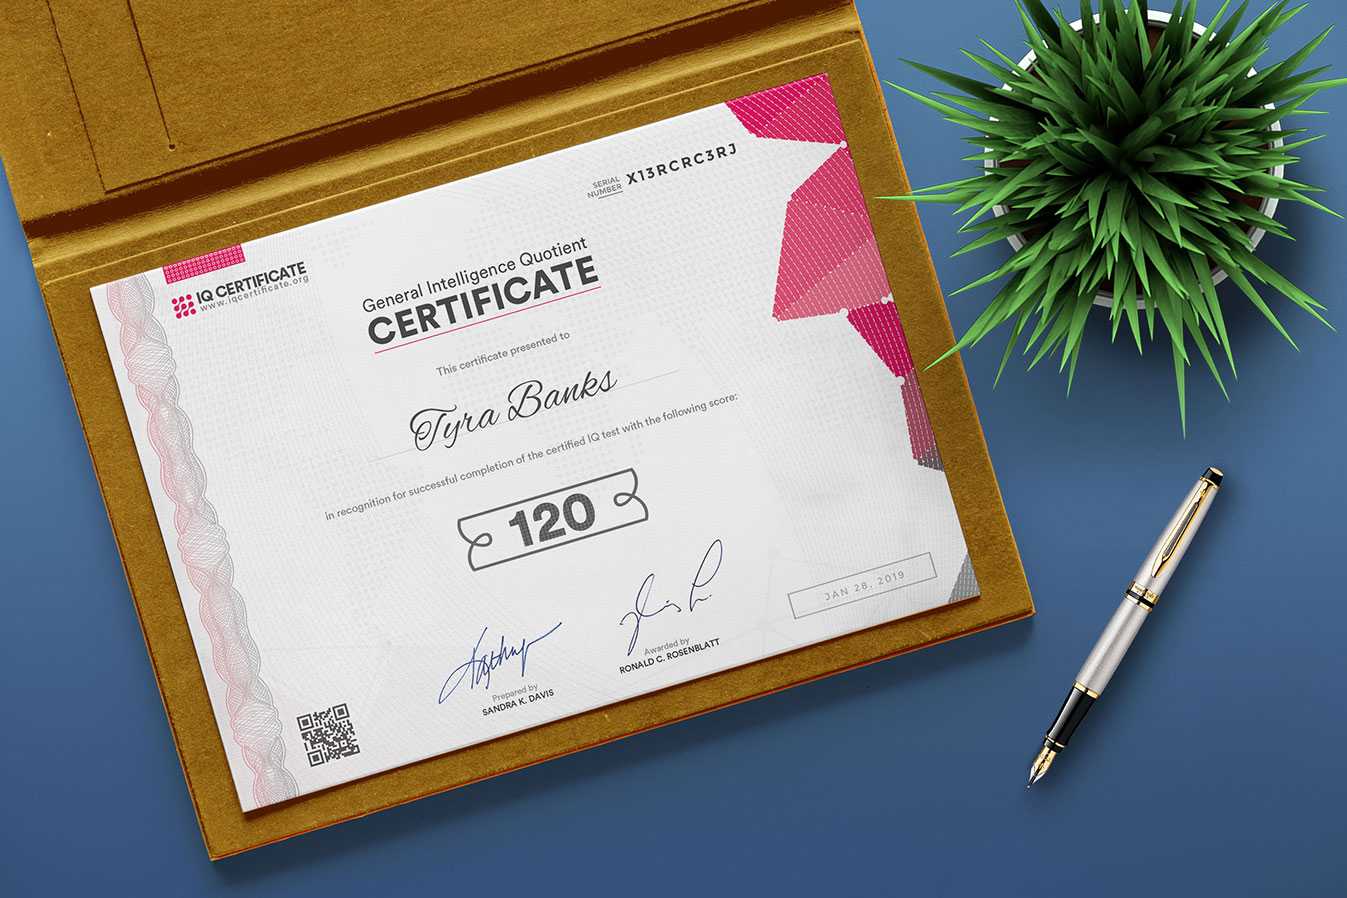 Sample Iq Certificate - Get Your Iq Certificate! Pertaining To Iq Certificate Template